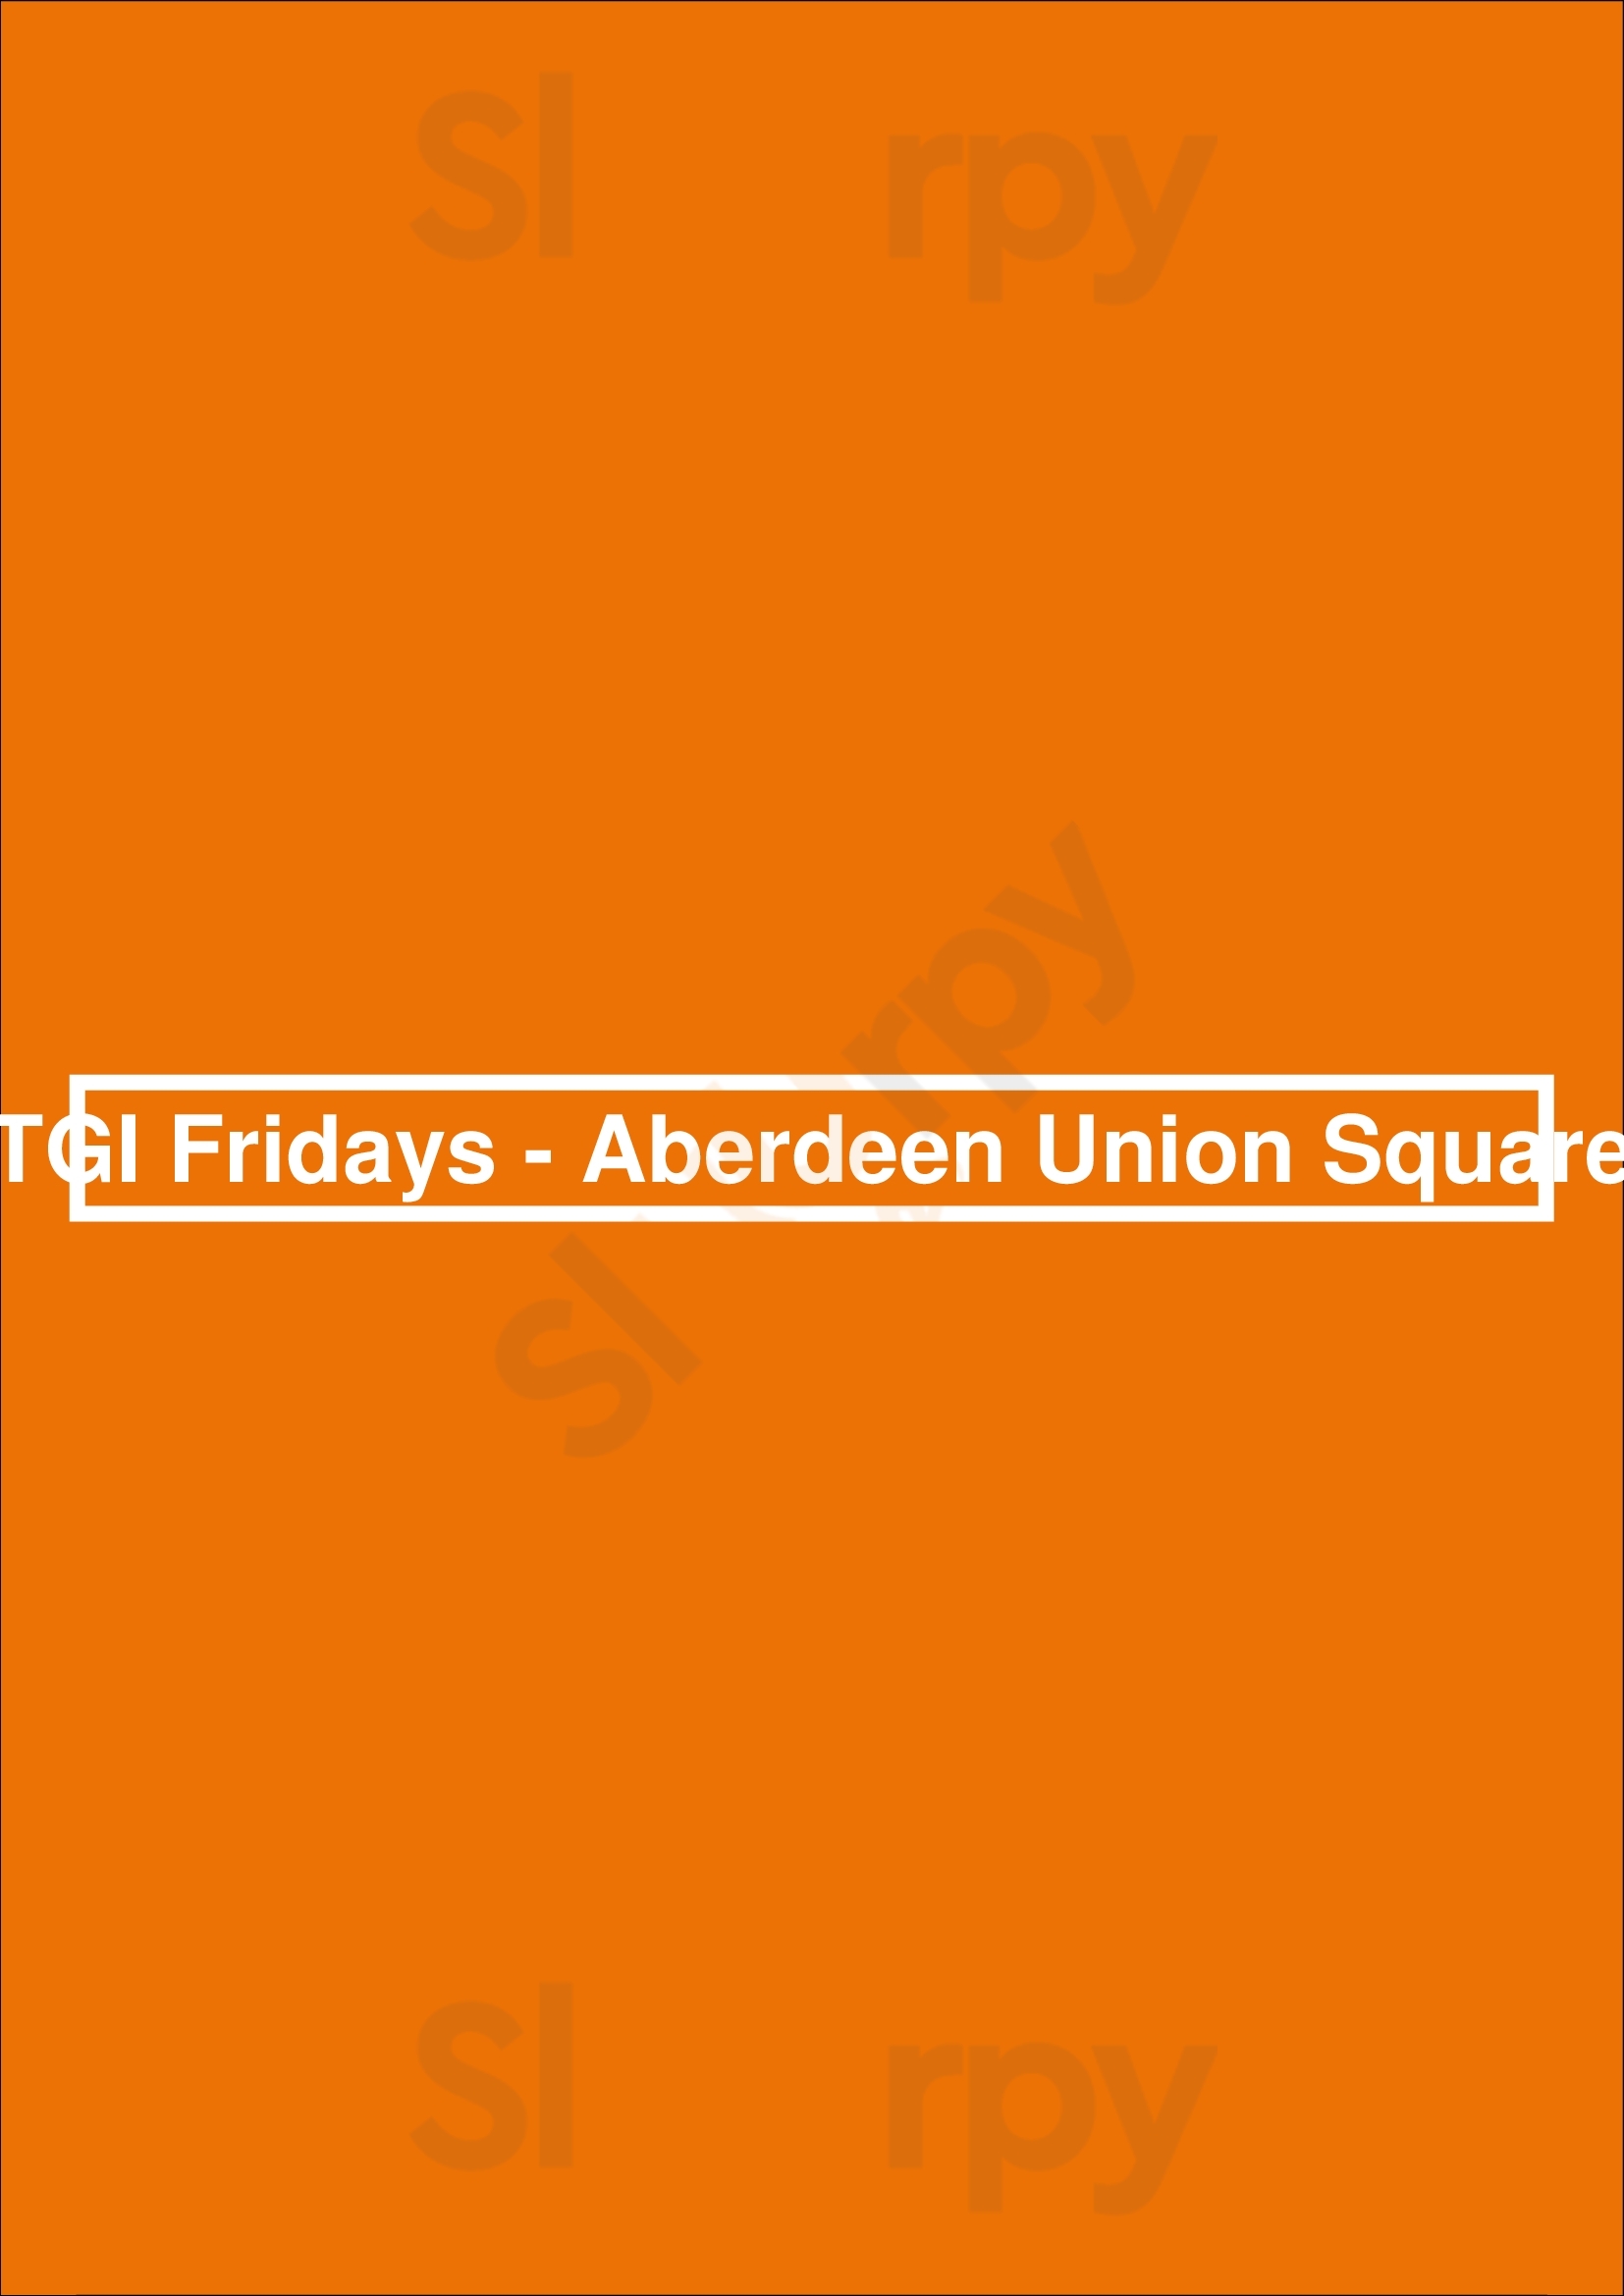 Tgi Fridays - Aberdeen Union Square Aberdeen Menu - 1